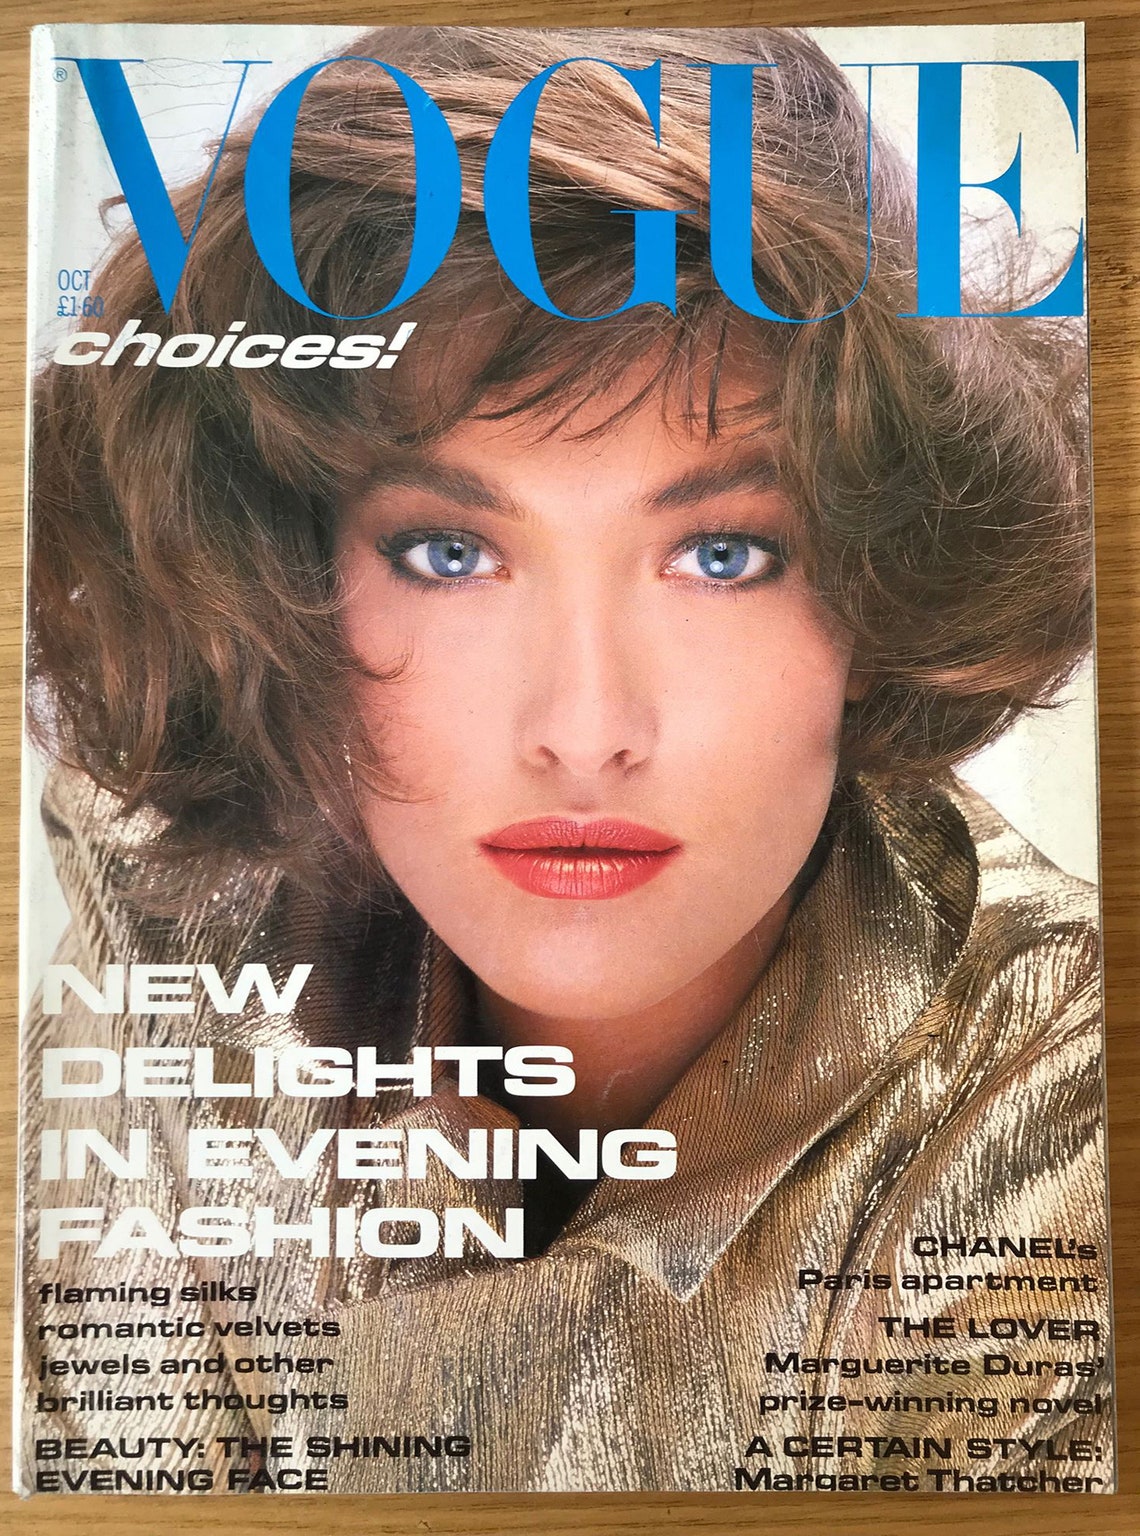 Vogue UK Oct 1985 British Original Vintage Fashion Magazine - Etsy